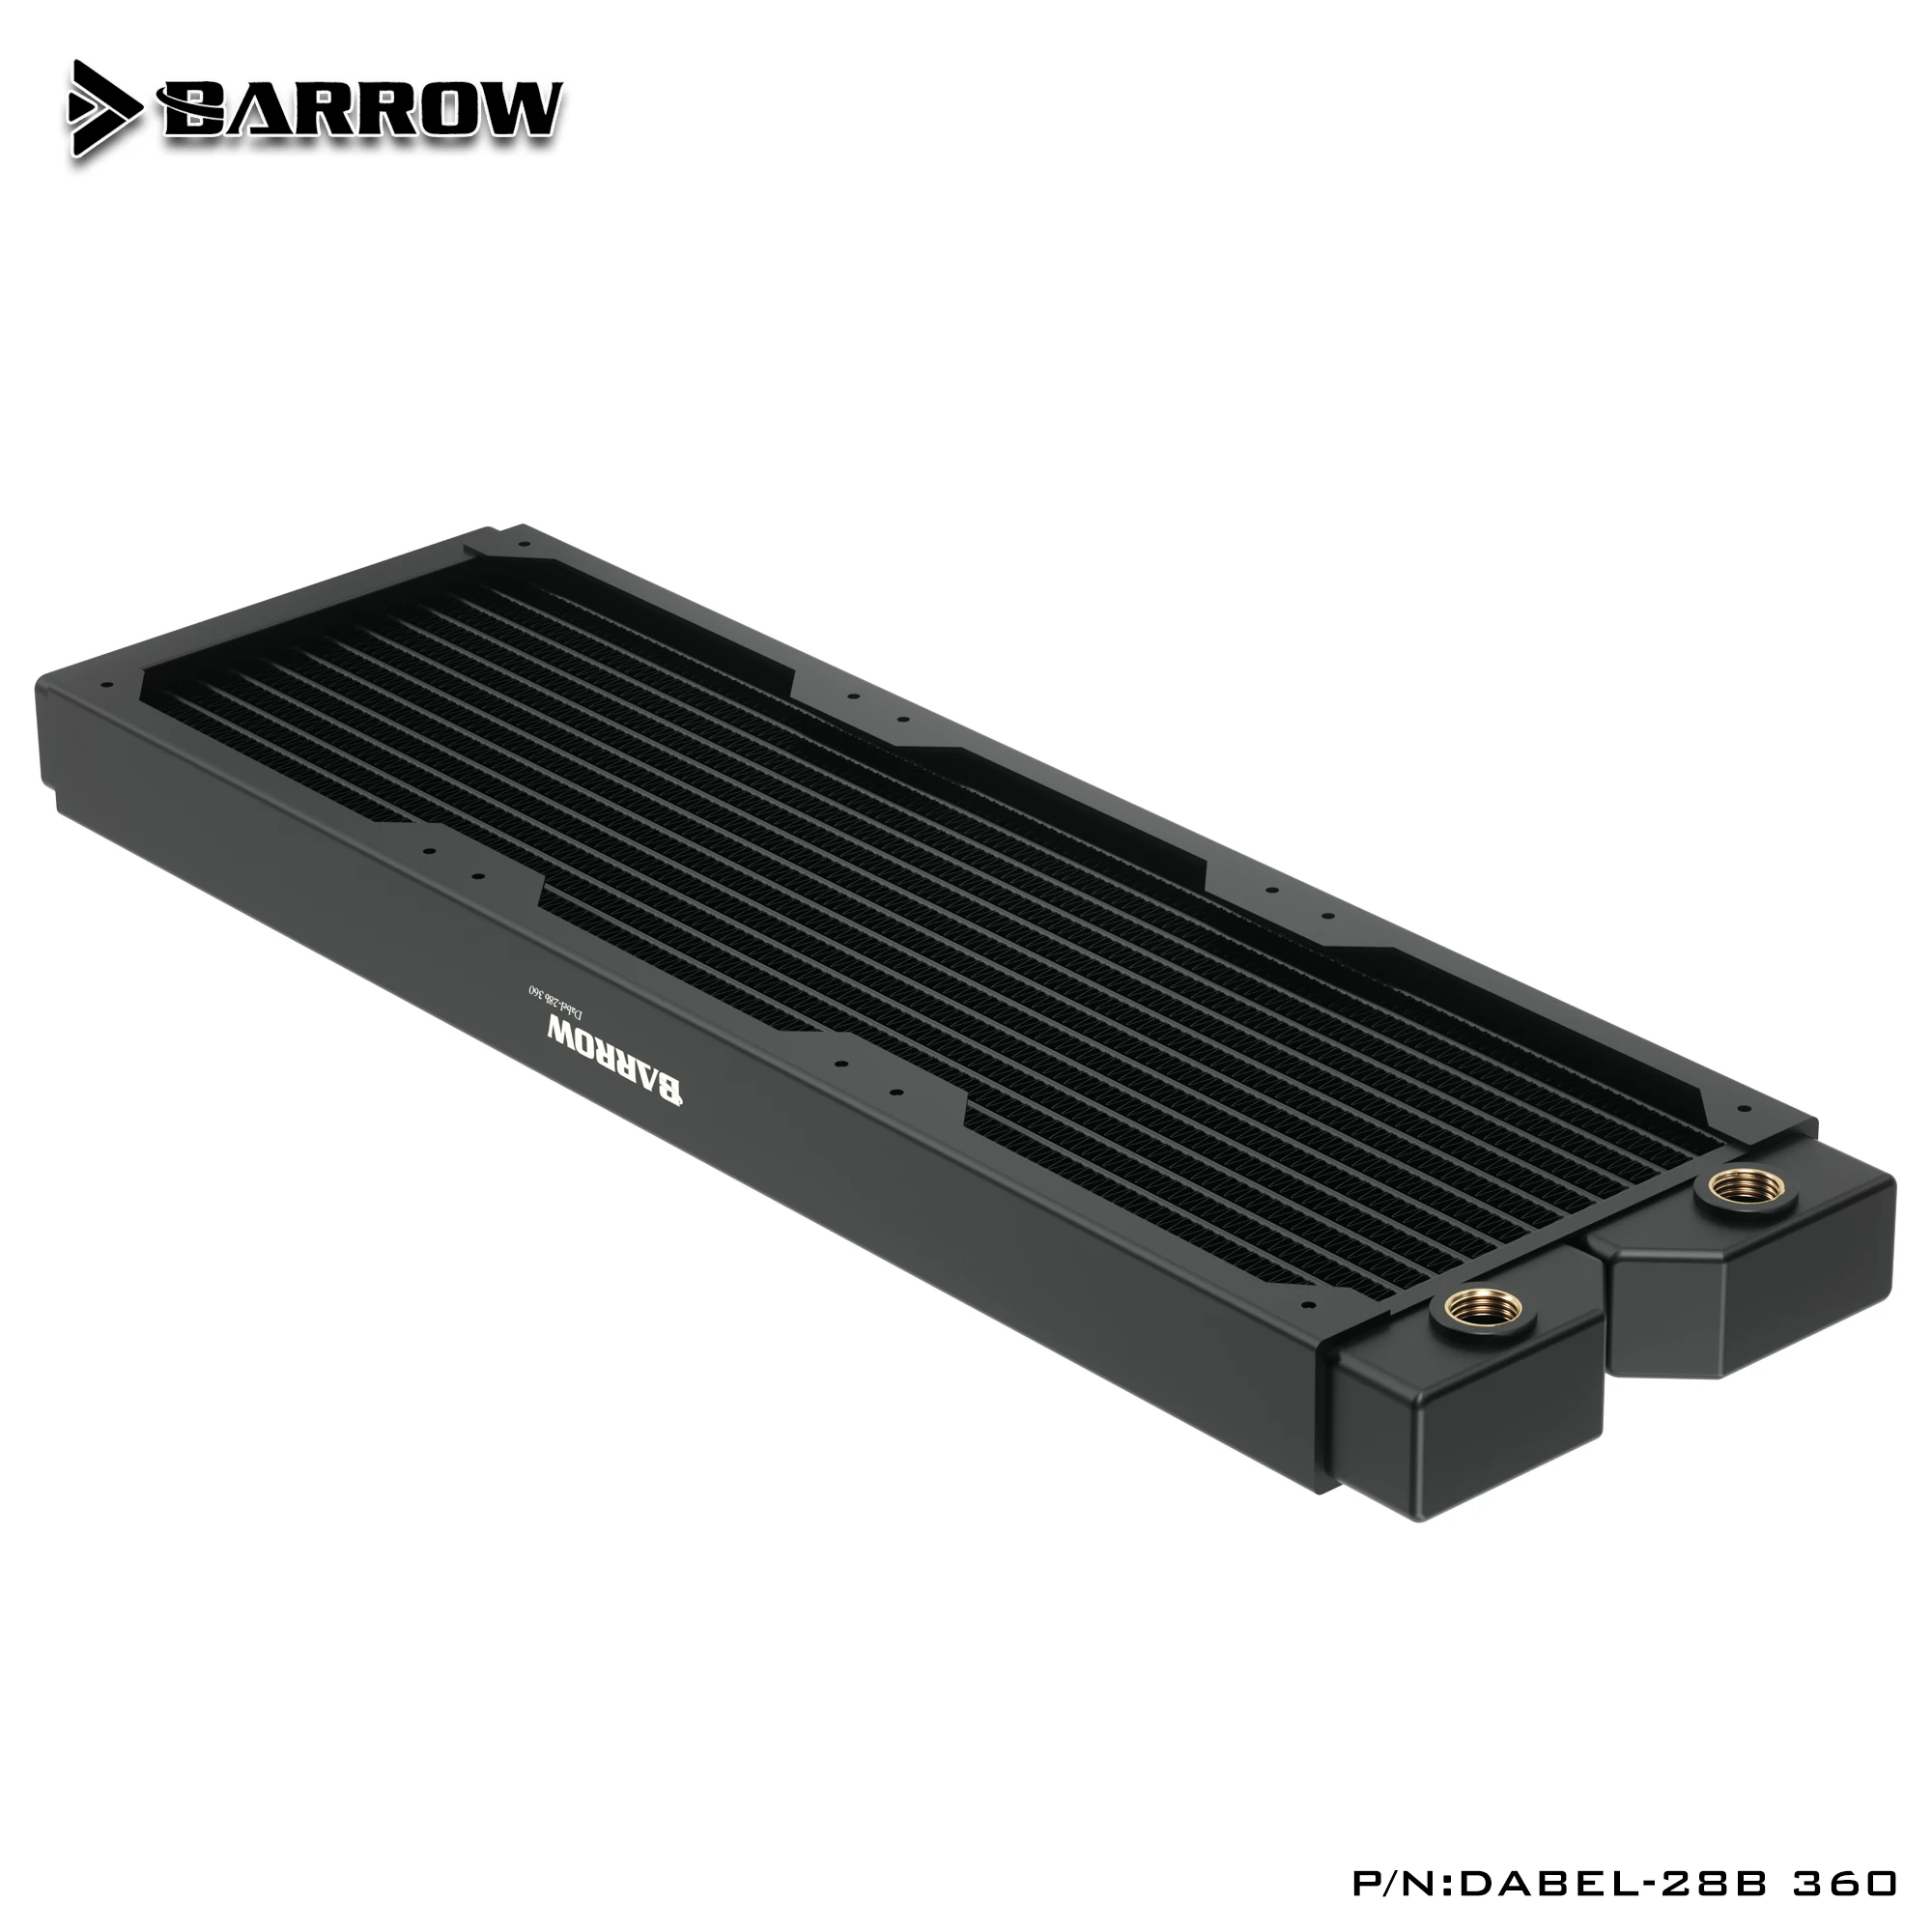 Barrow Dabel-28b 360mm 3x12cm Copper Radiator Heat Exchanger Water Cooling